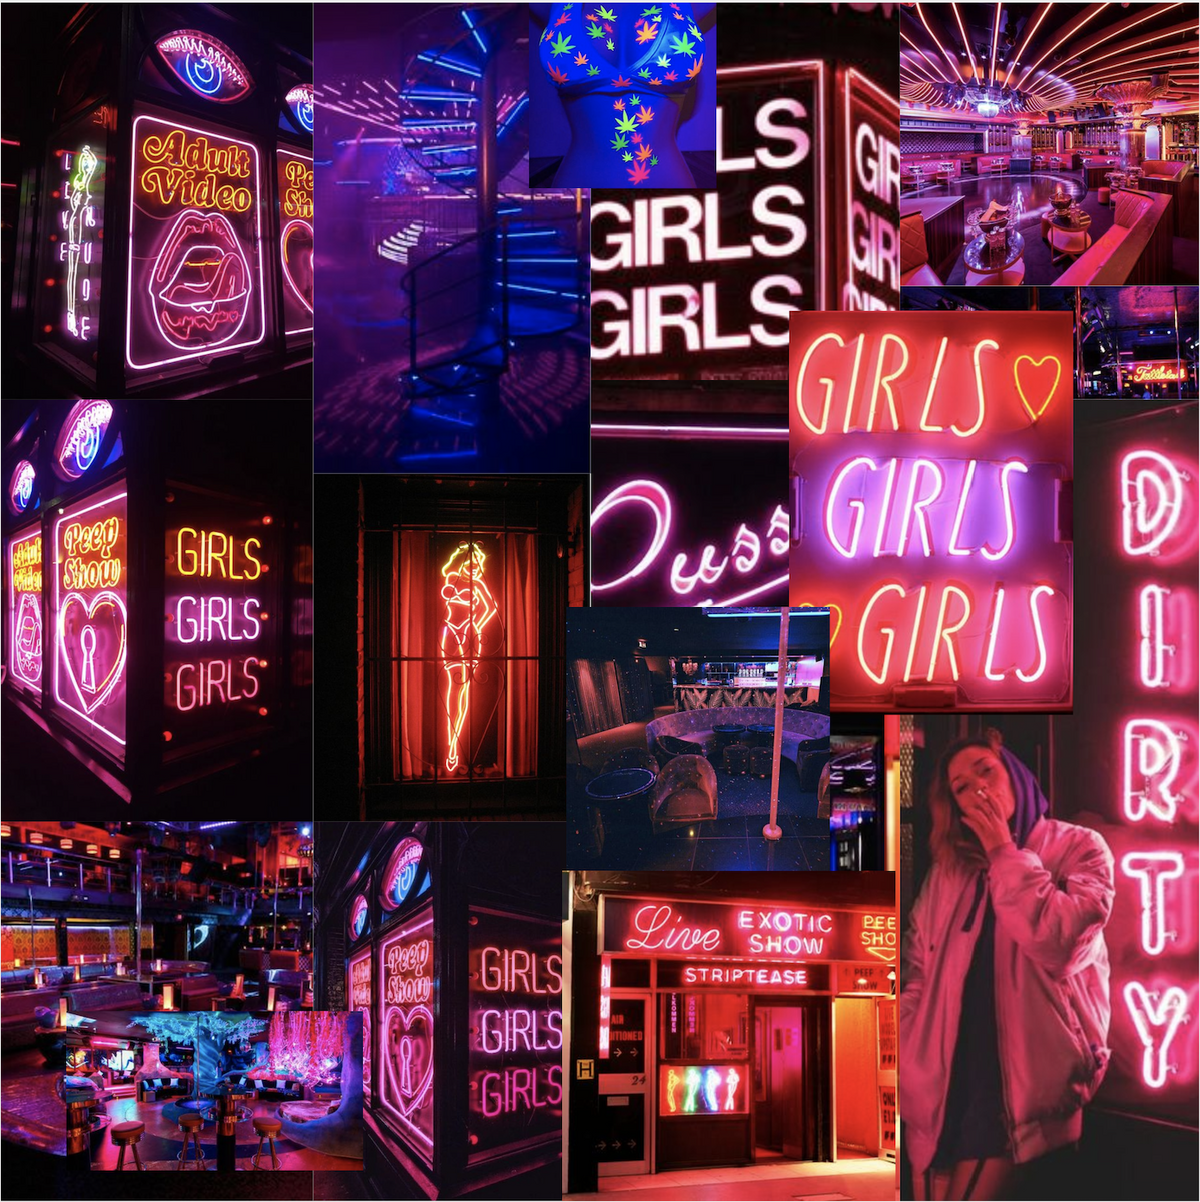 Strip club - Wikipedia